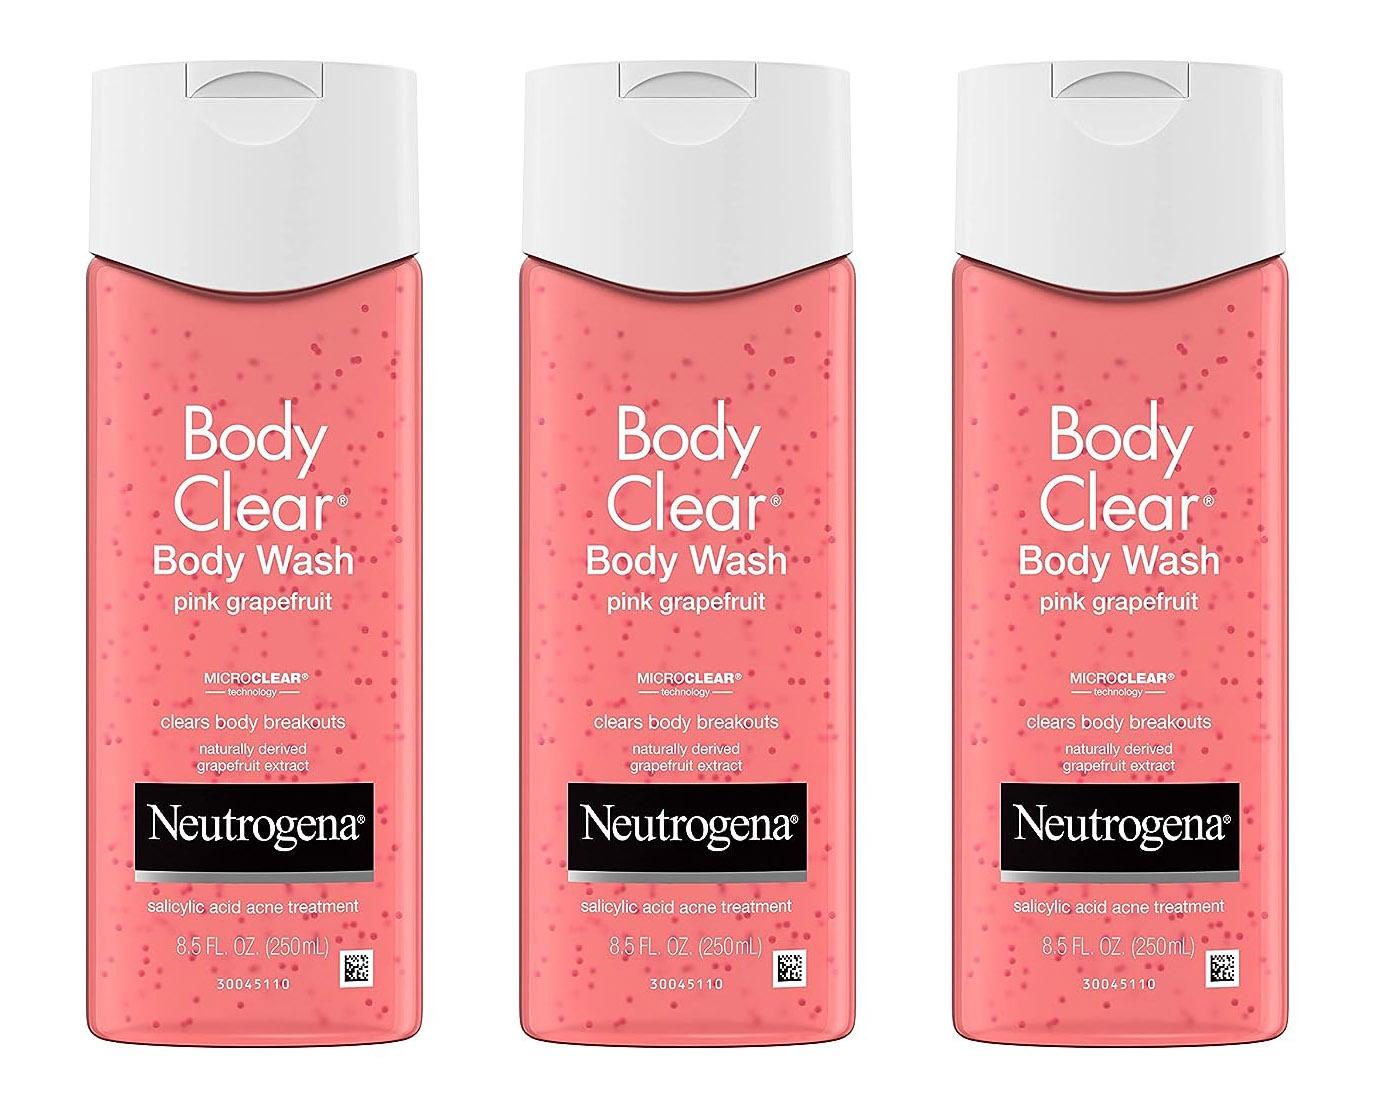 Neutrogena Body Clear Acne Treatment Body Wash 3 Pack for $14.48